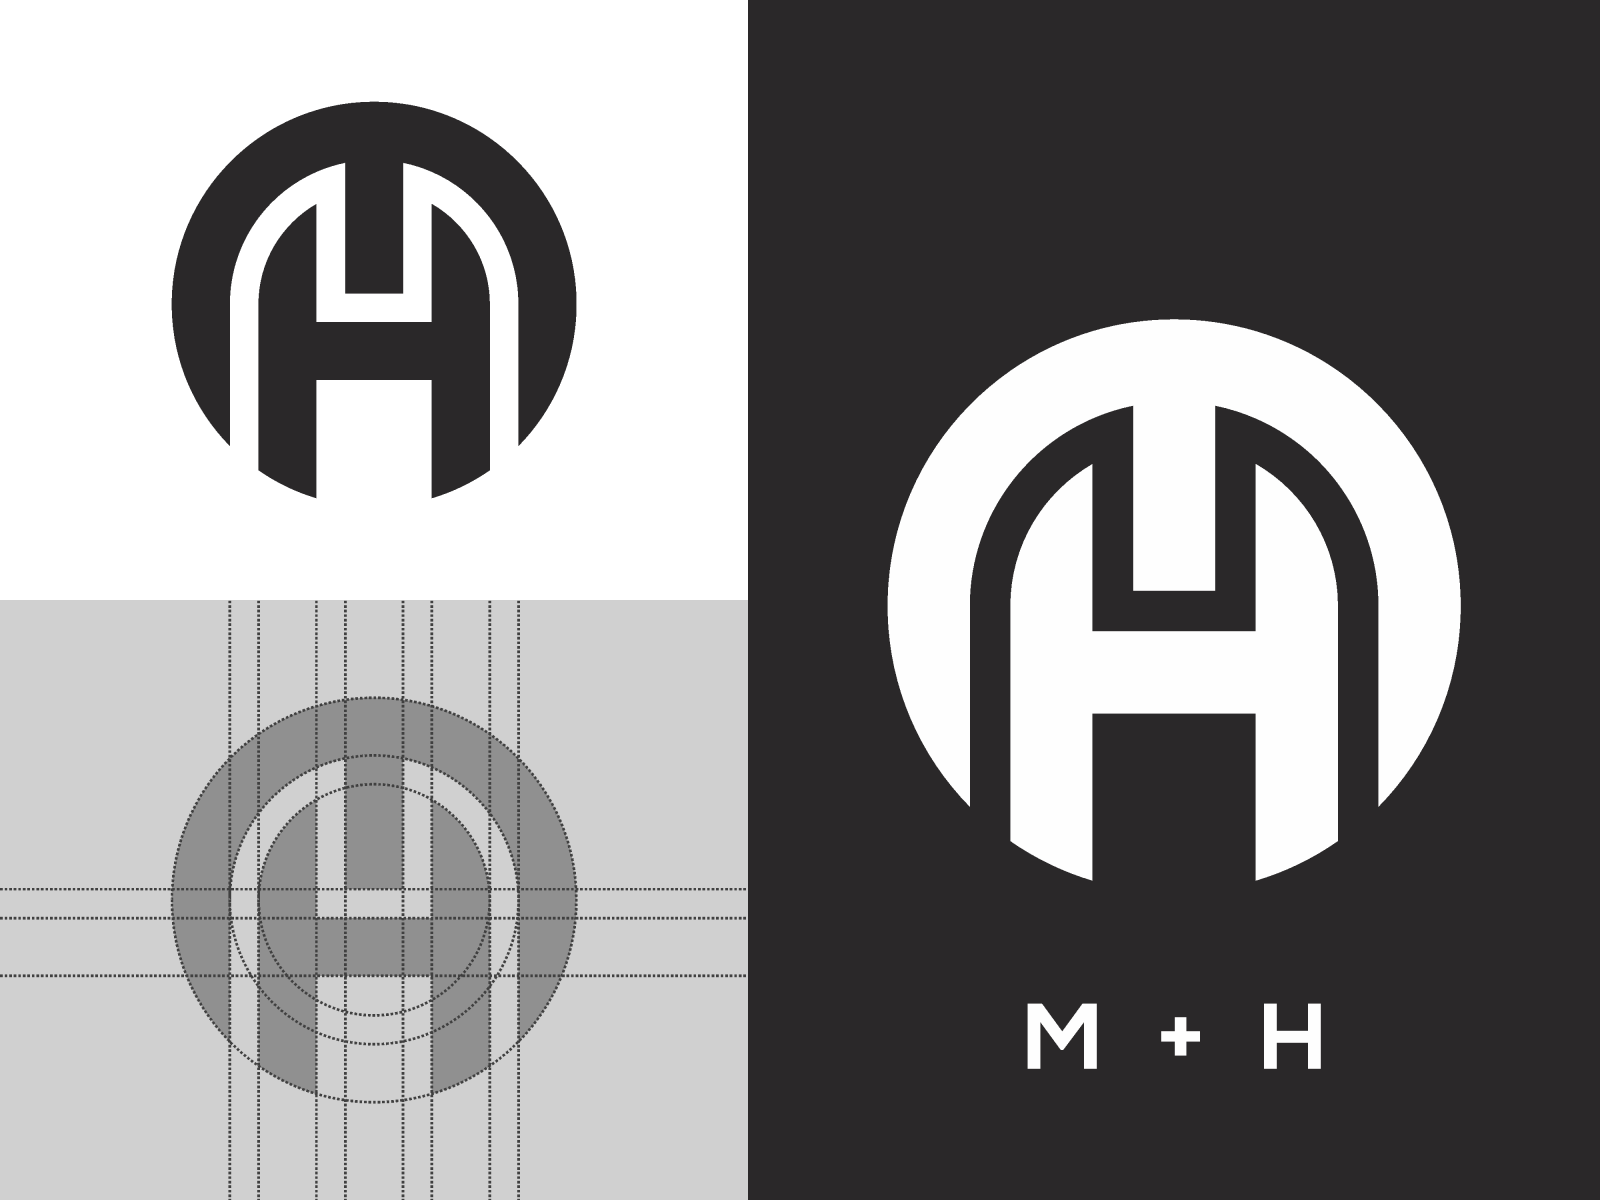 mh logo by warehouse_logo on Dribbble